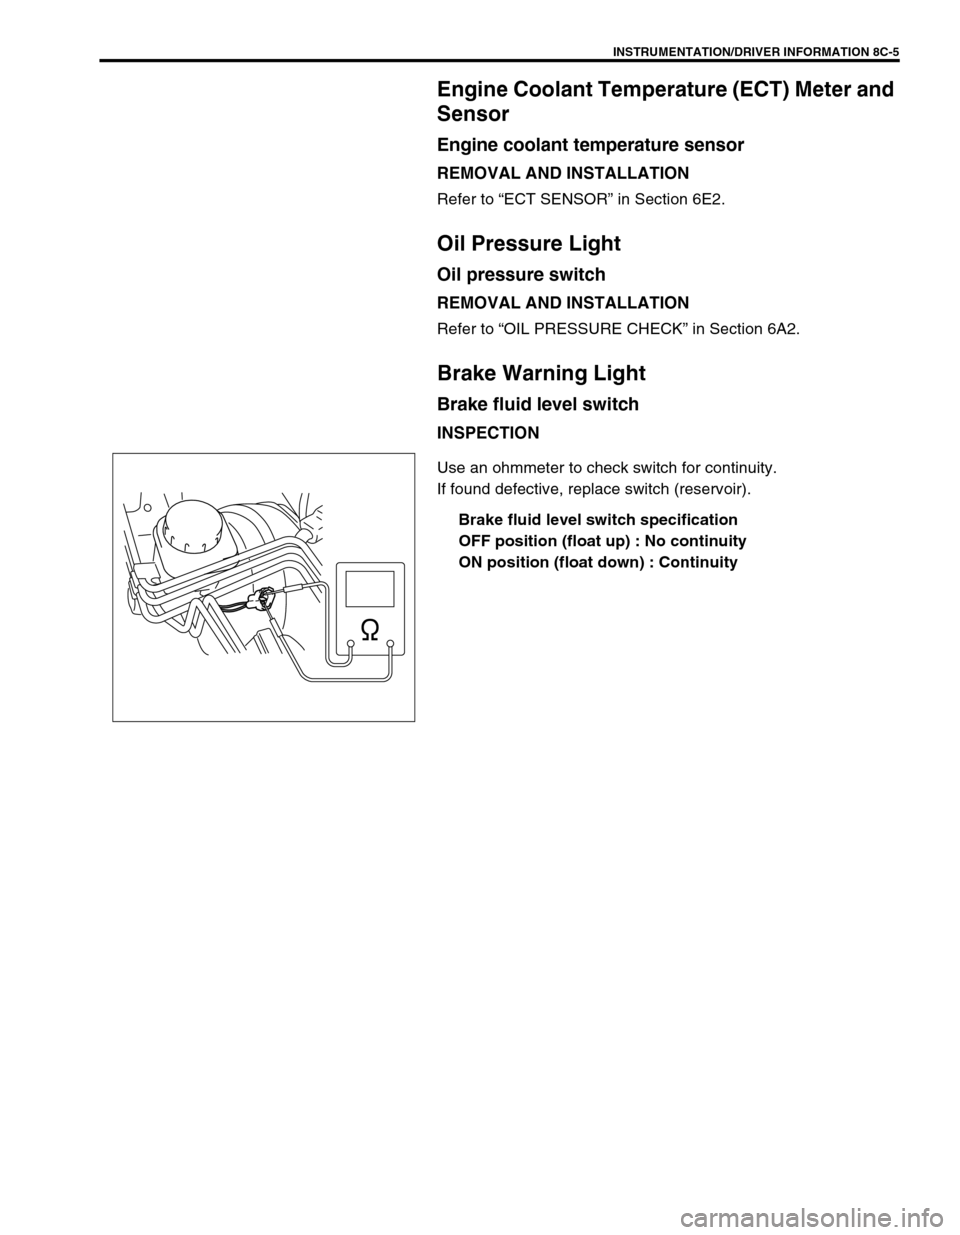 SUZUKI GRAND VITARA 1999 2.G Manual PDF INSTRUMENTATION/DRIVER INFORMATION 8C-5
Engine Coolant Temperature (ECT) Meter and 
Sensor
Engine coolant temperature sensor
REMOVAL AND INSTALLATION
Refer to “ECT SENSOR” in Section 6E2.
Oil Pres